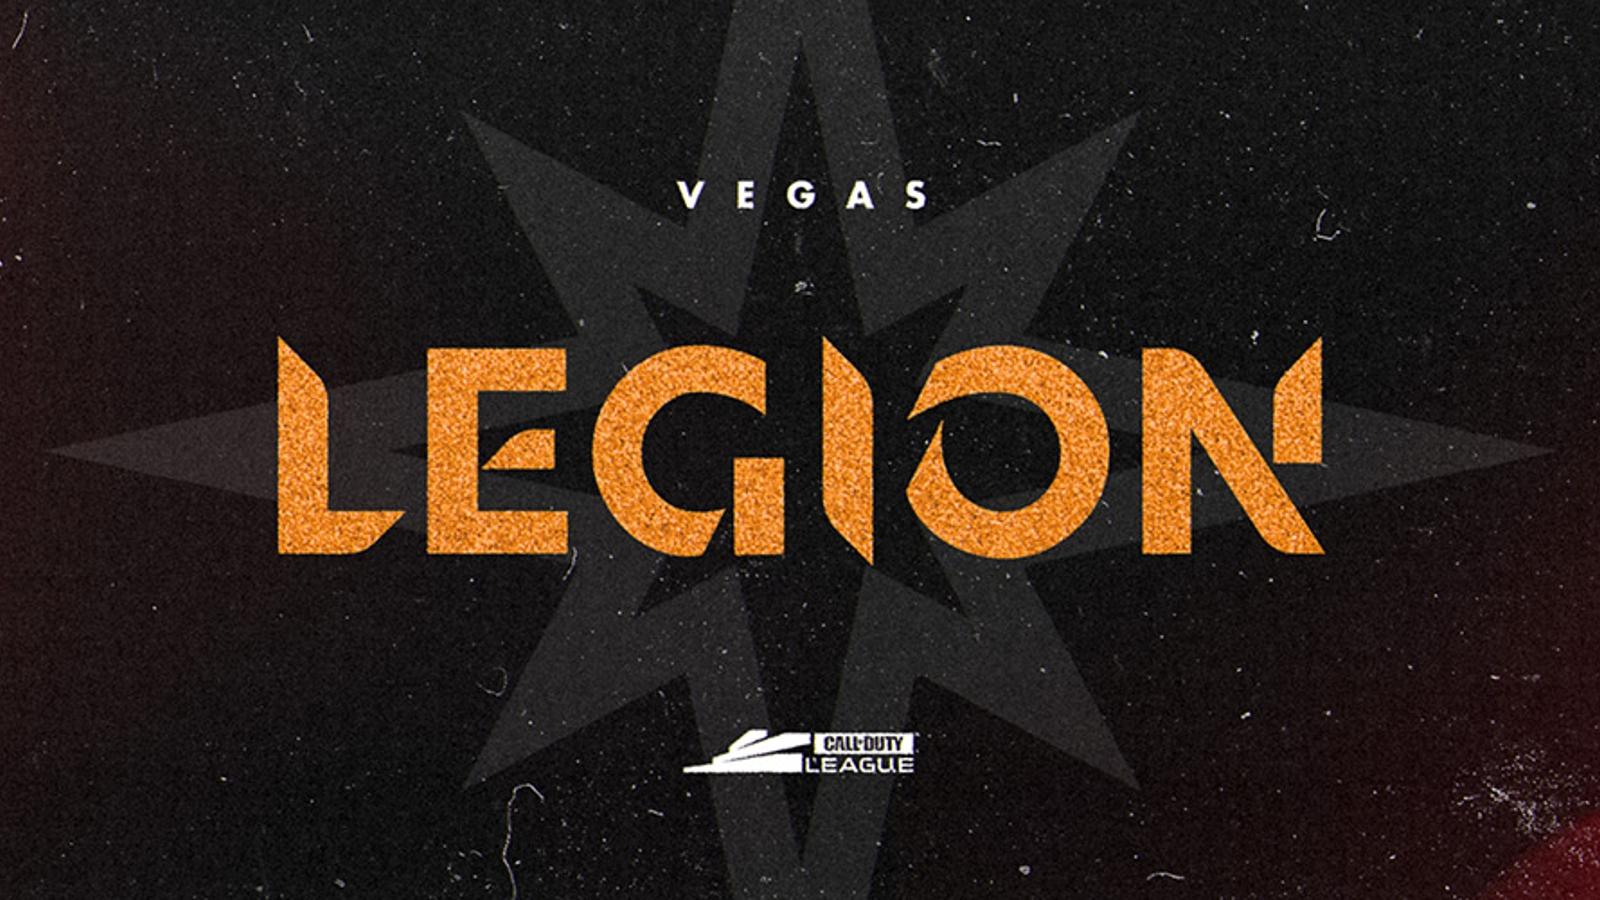 Vegas Legion Call of Duty League graphic